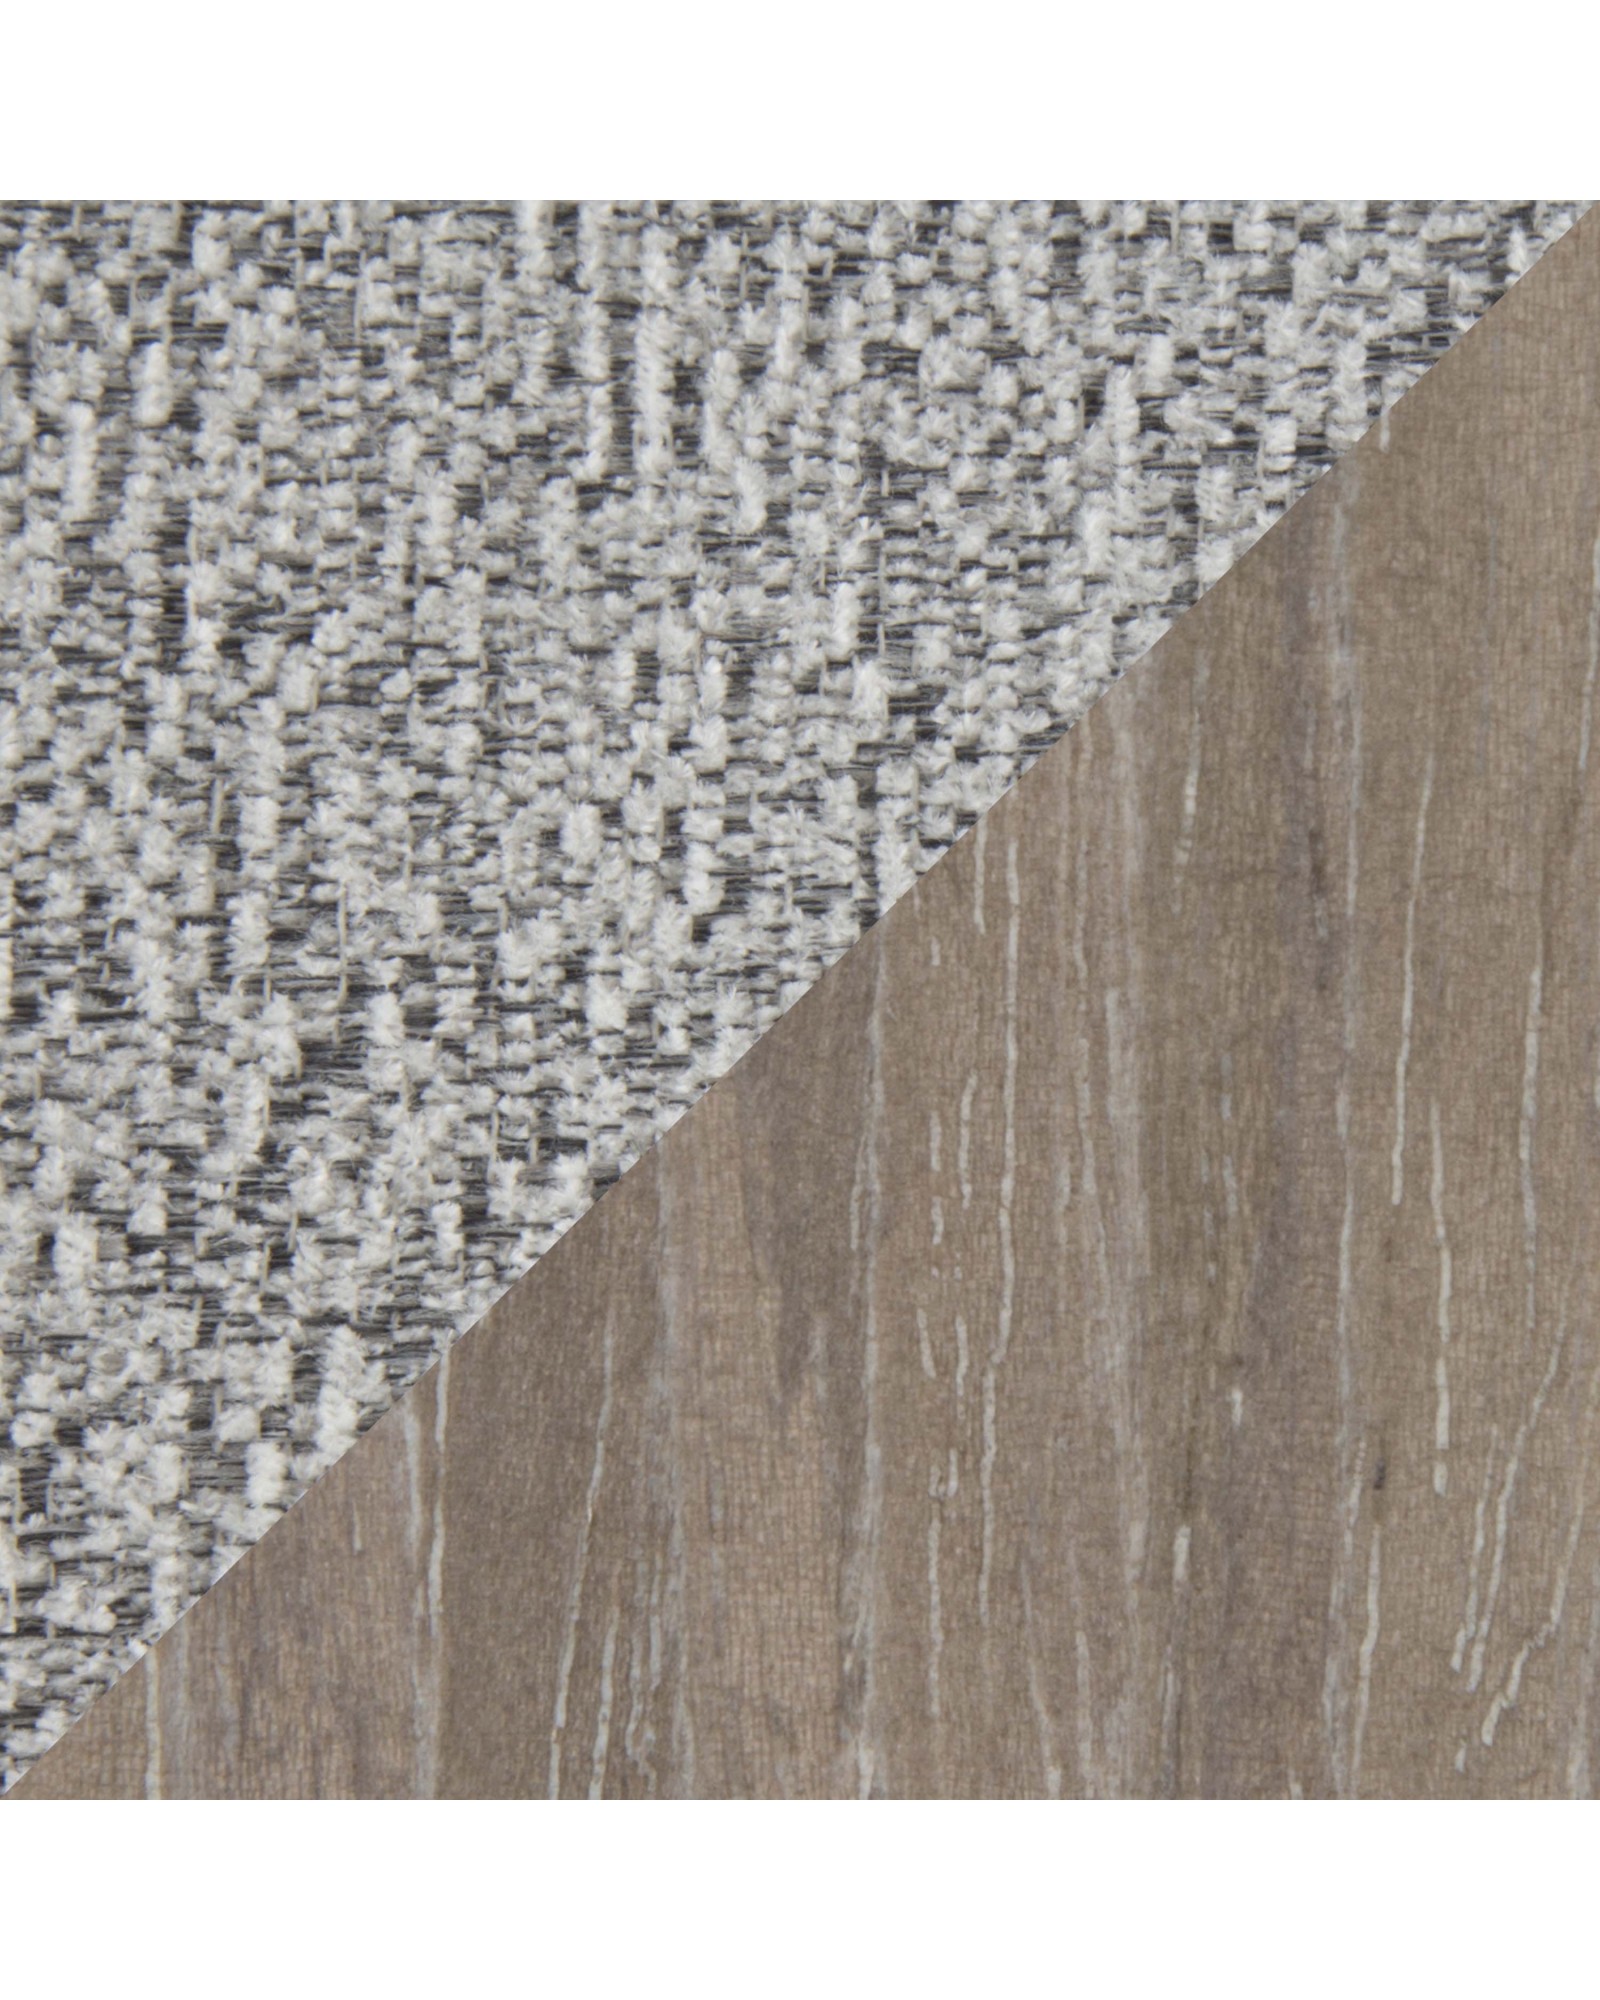 Folia Mid-Century Modern Adjustable Barstool in Light Grey Wood and Light Grey Fabric